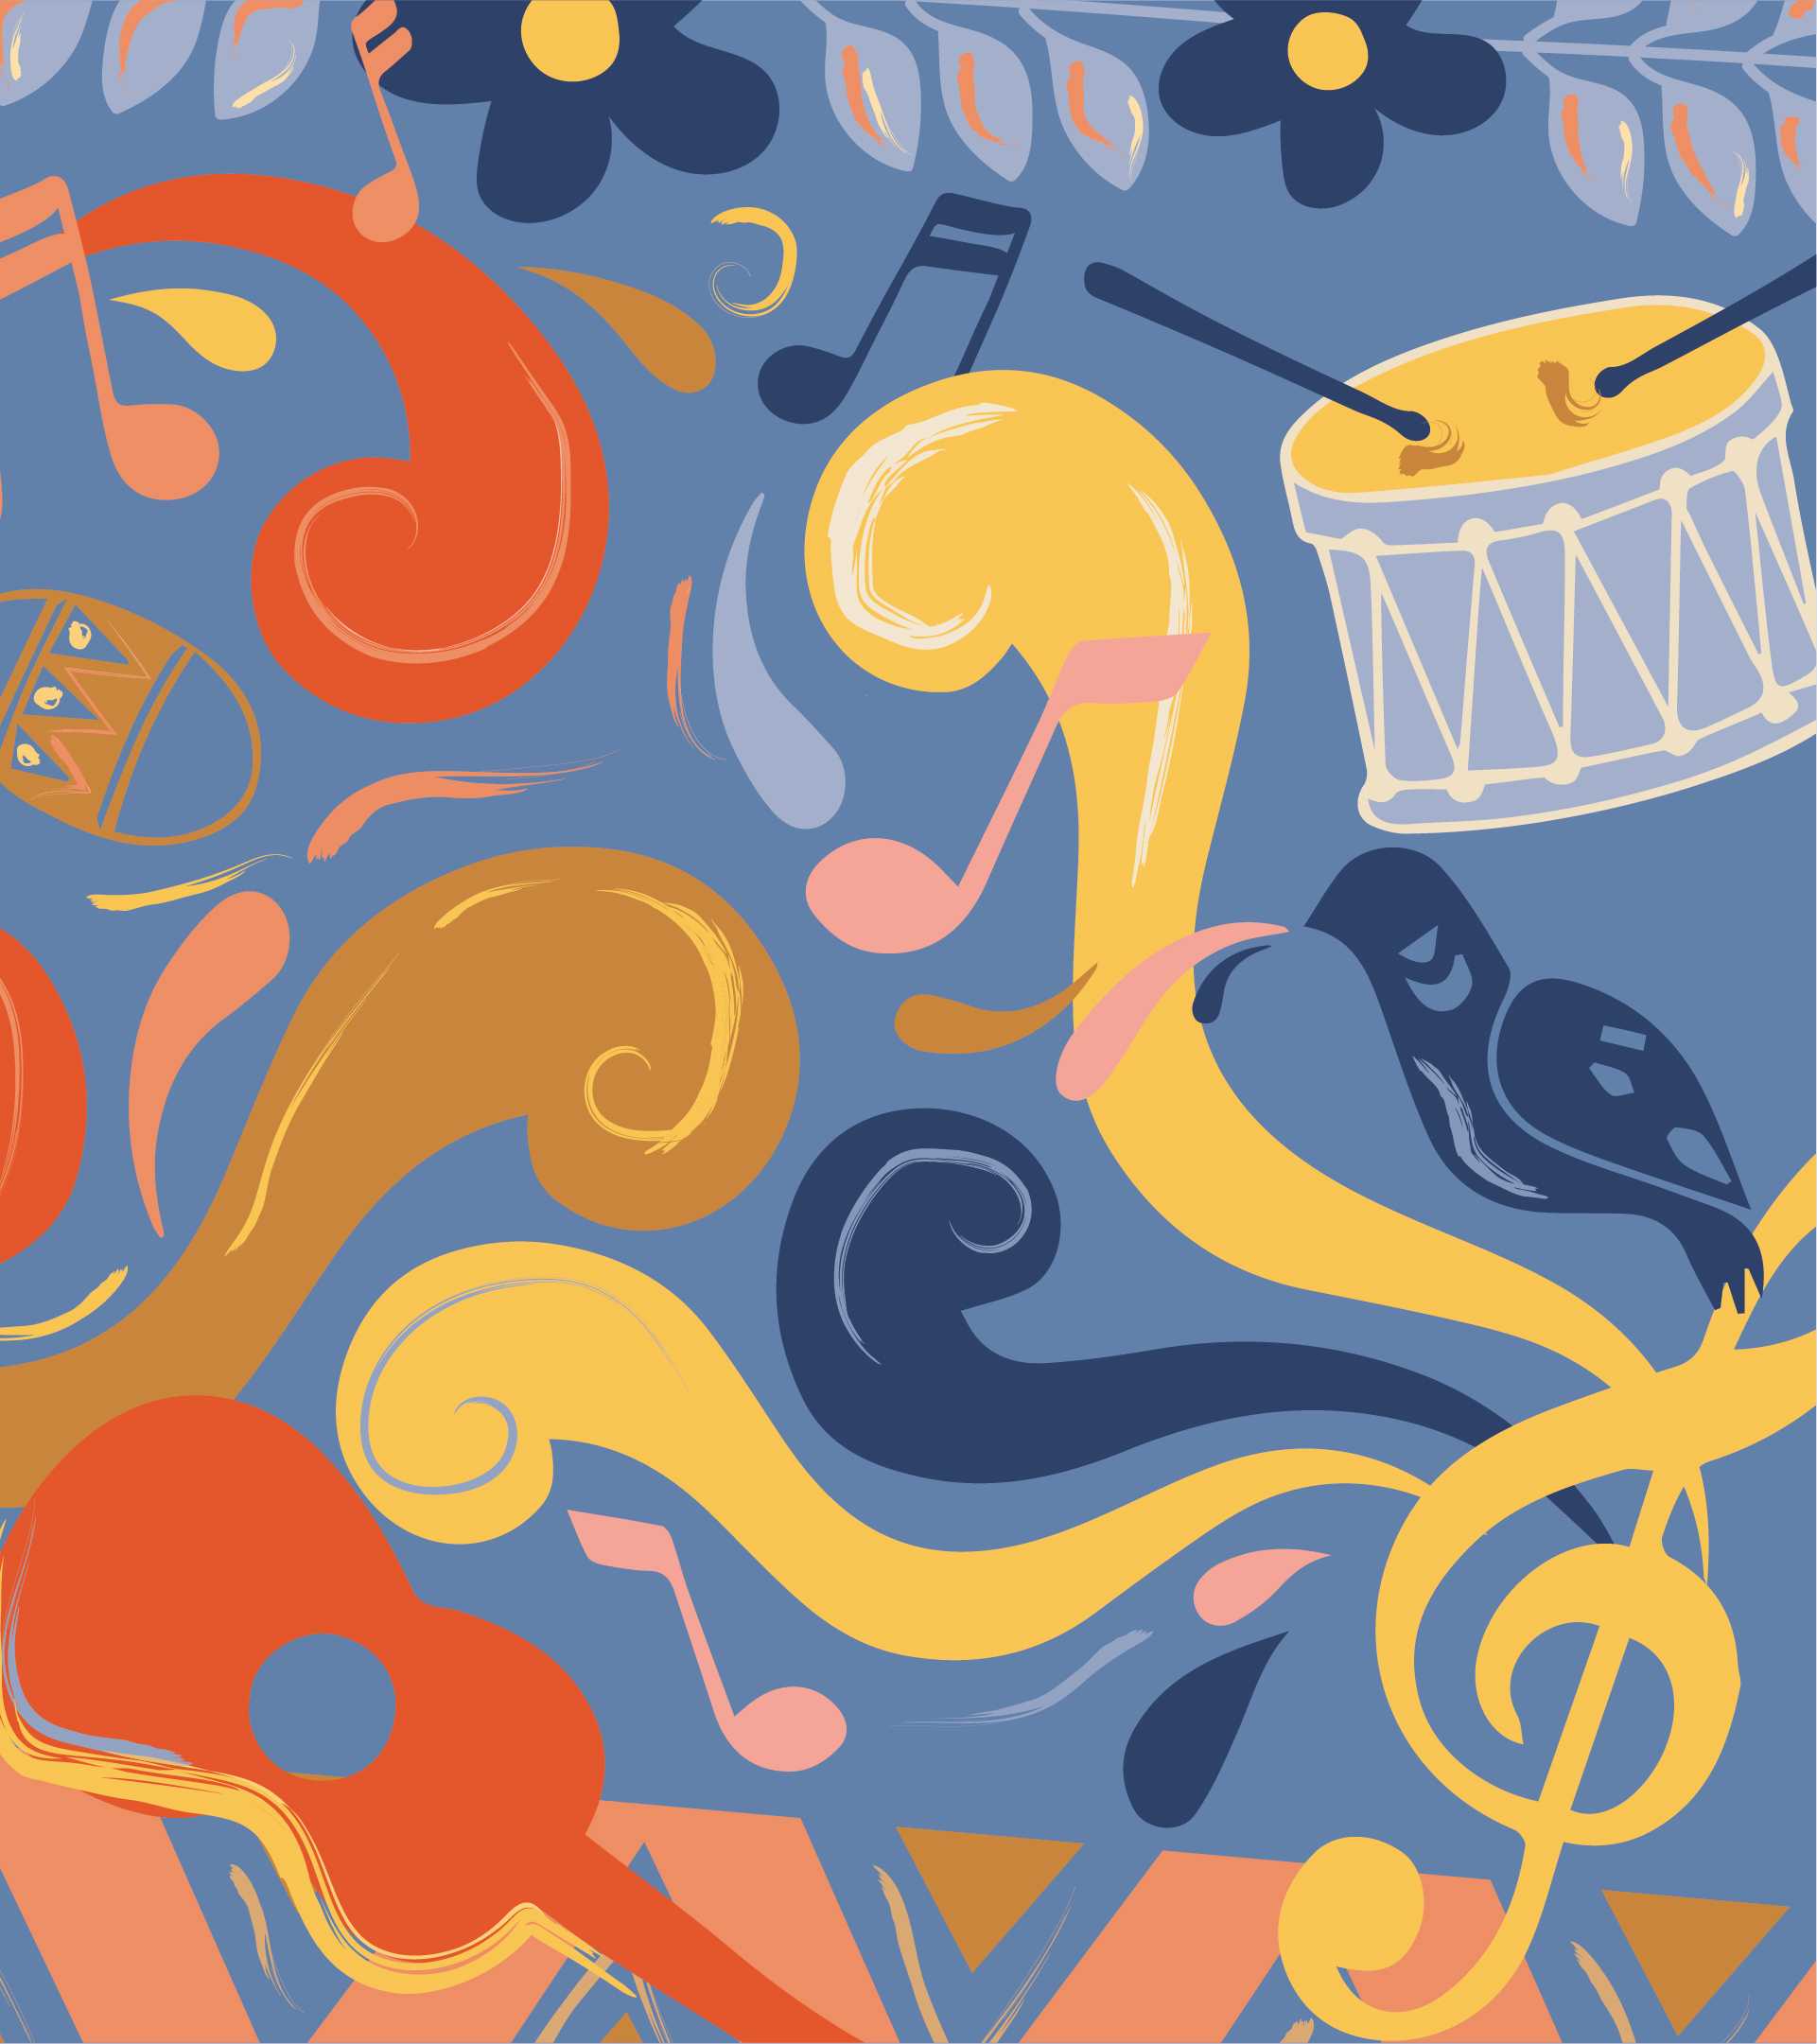 Illustration for Lund choral festival designed by Studio Poi